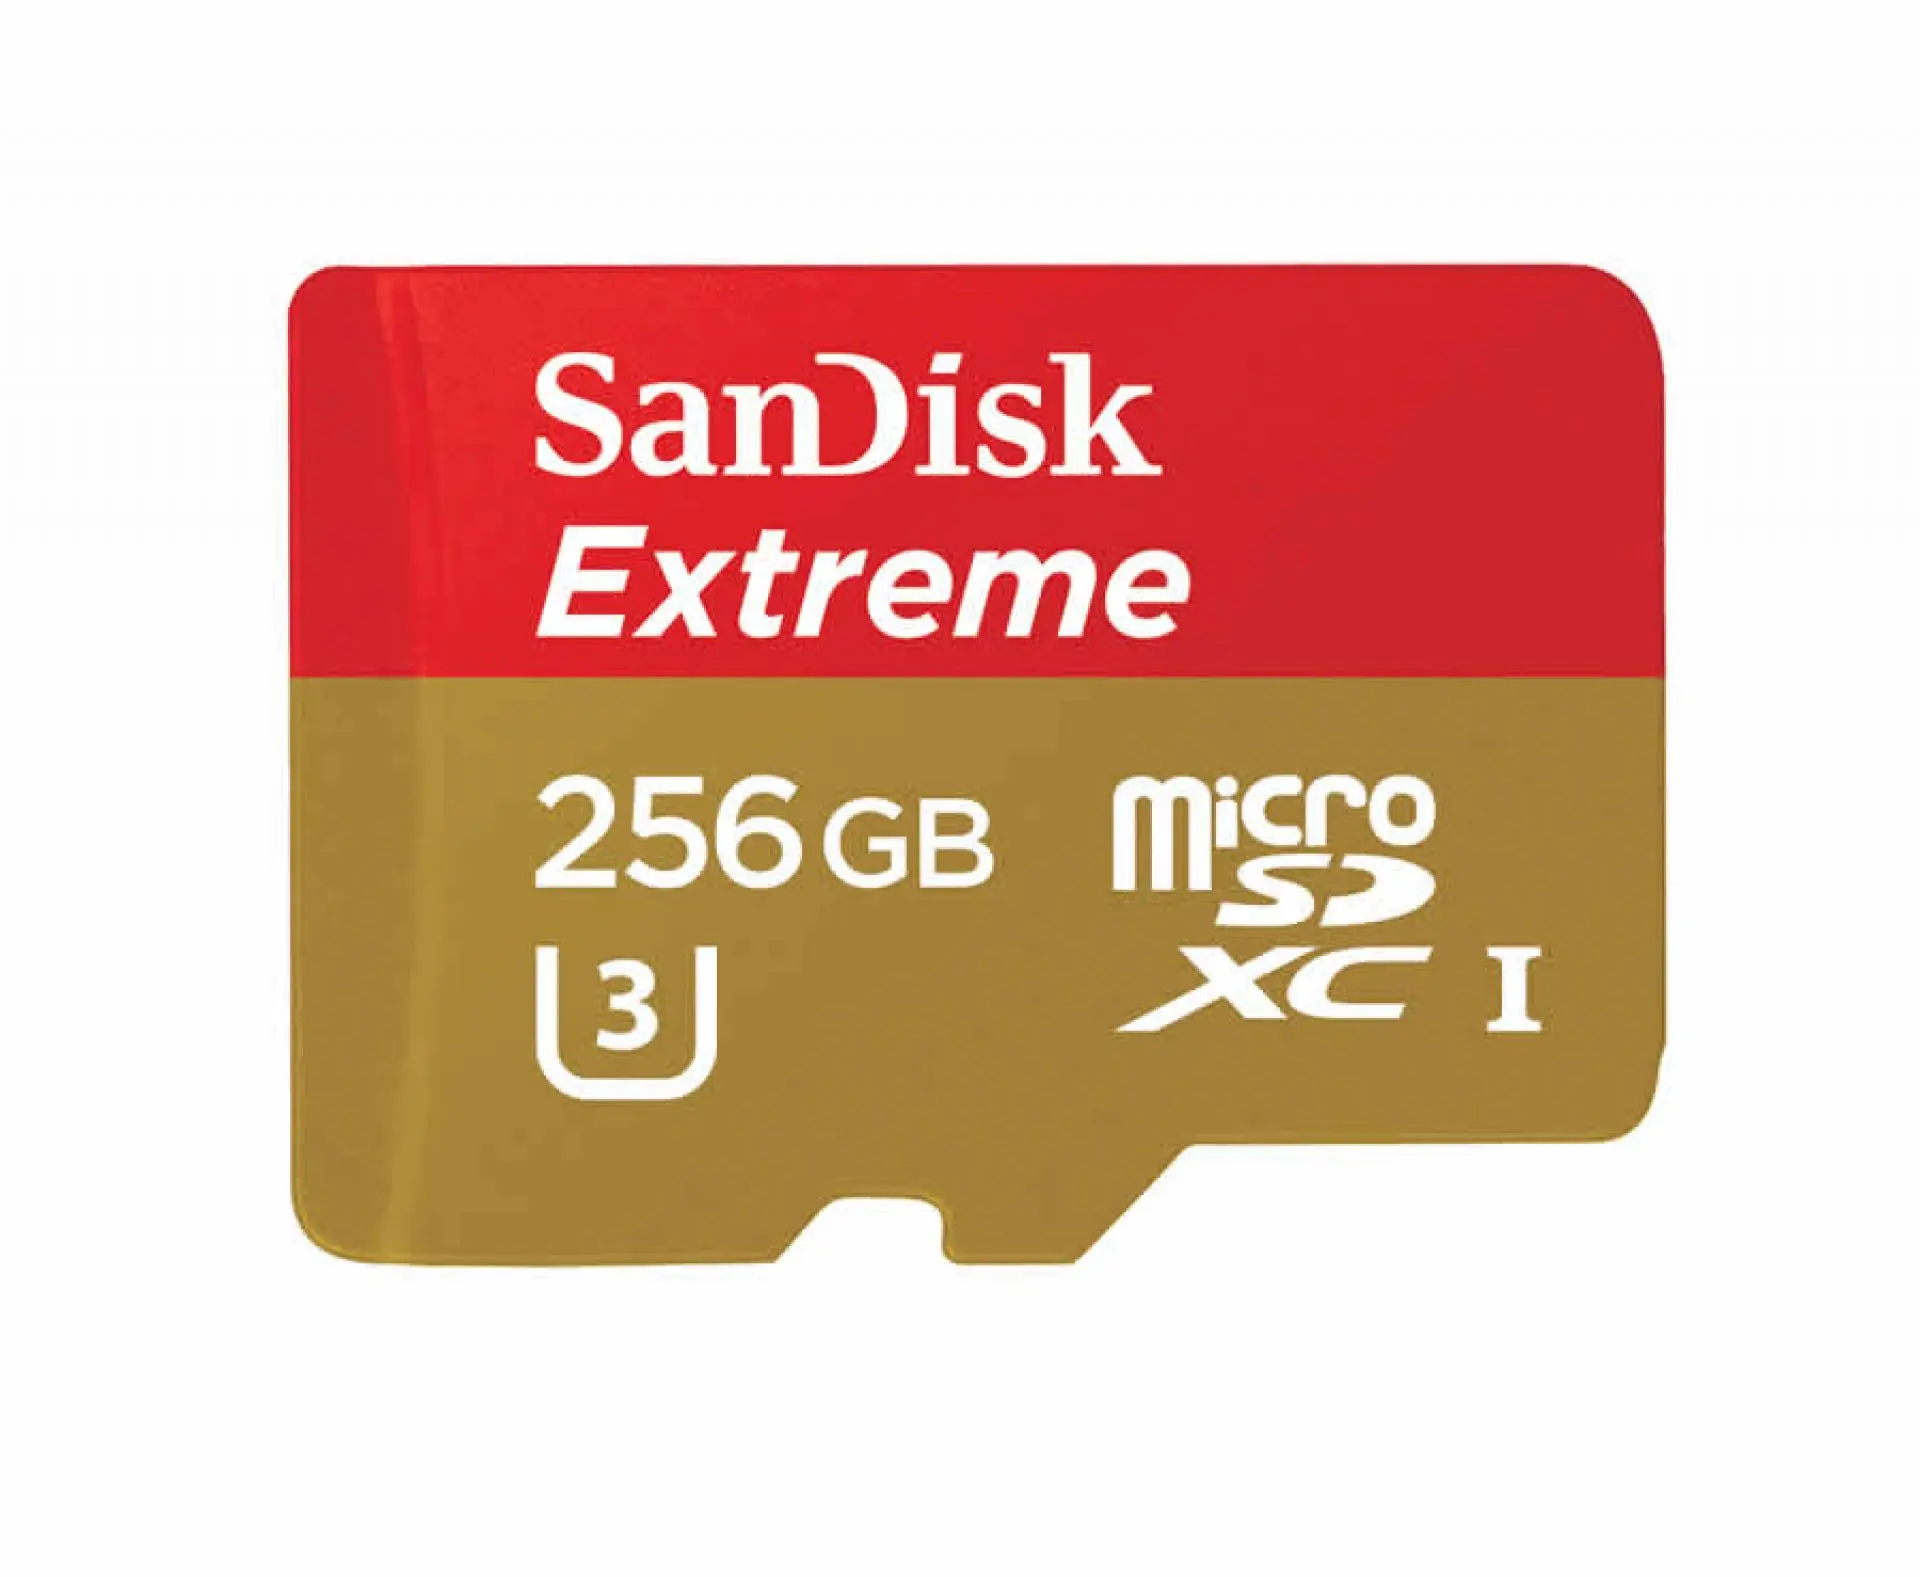 sandisk-extreme-256gb